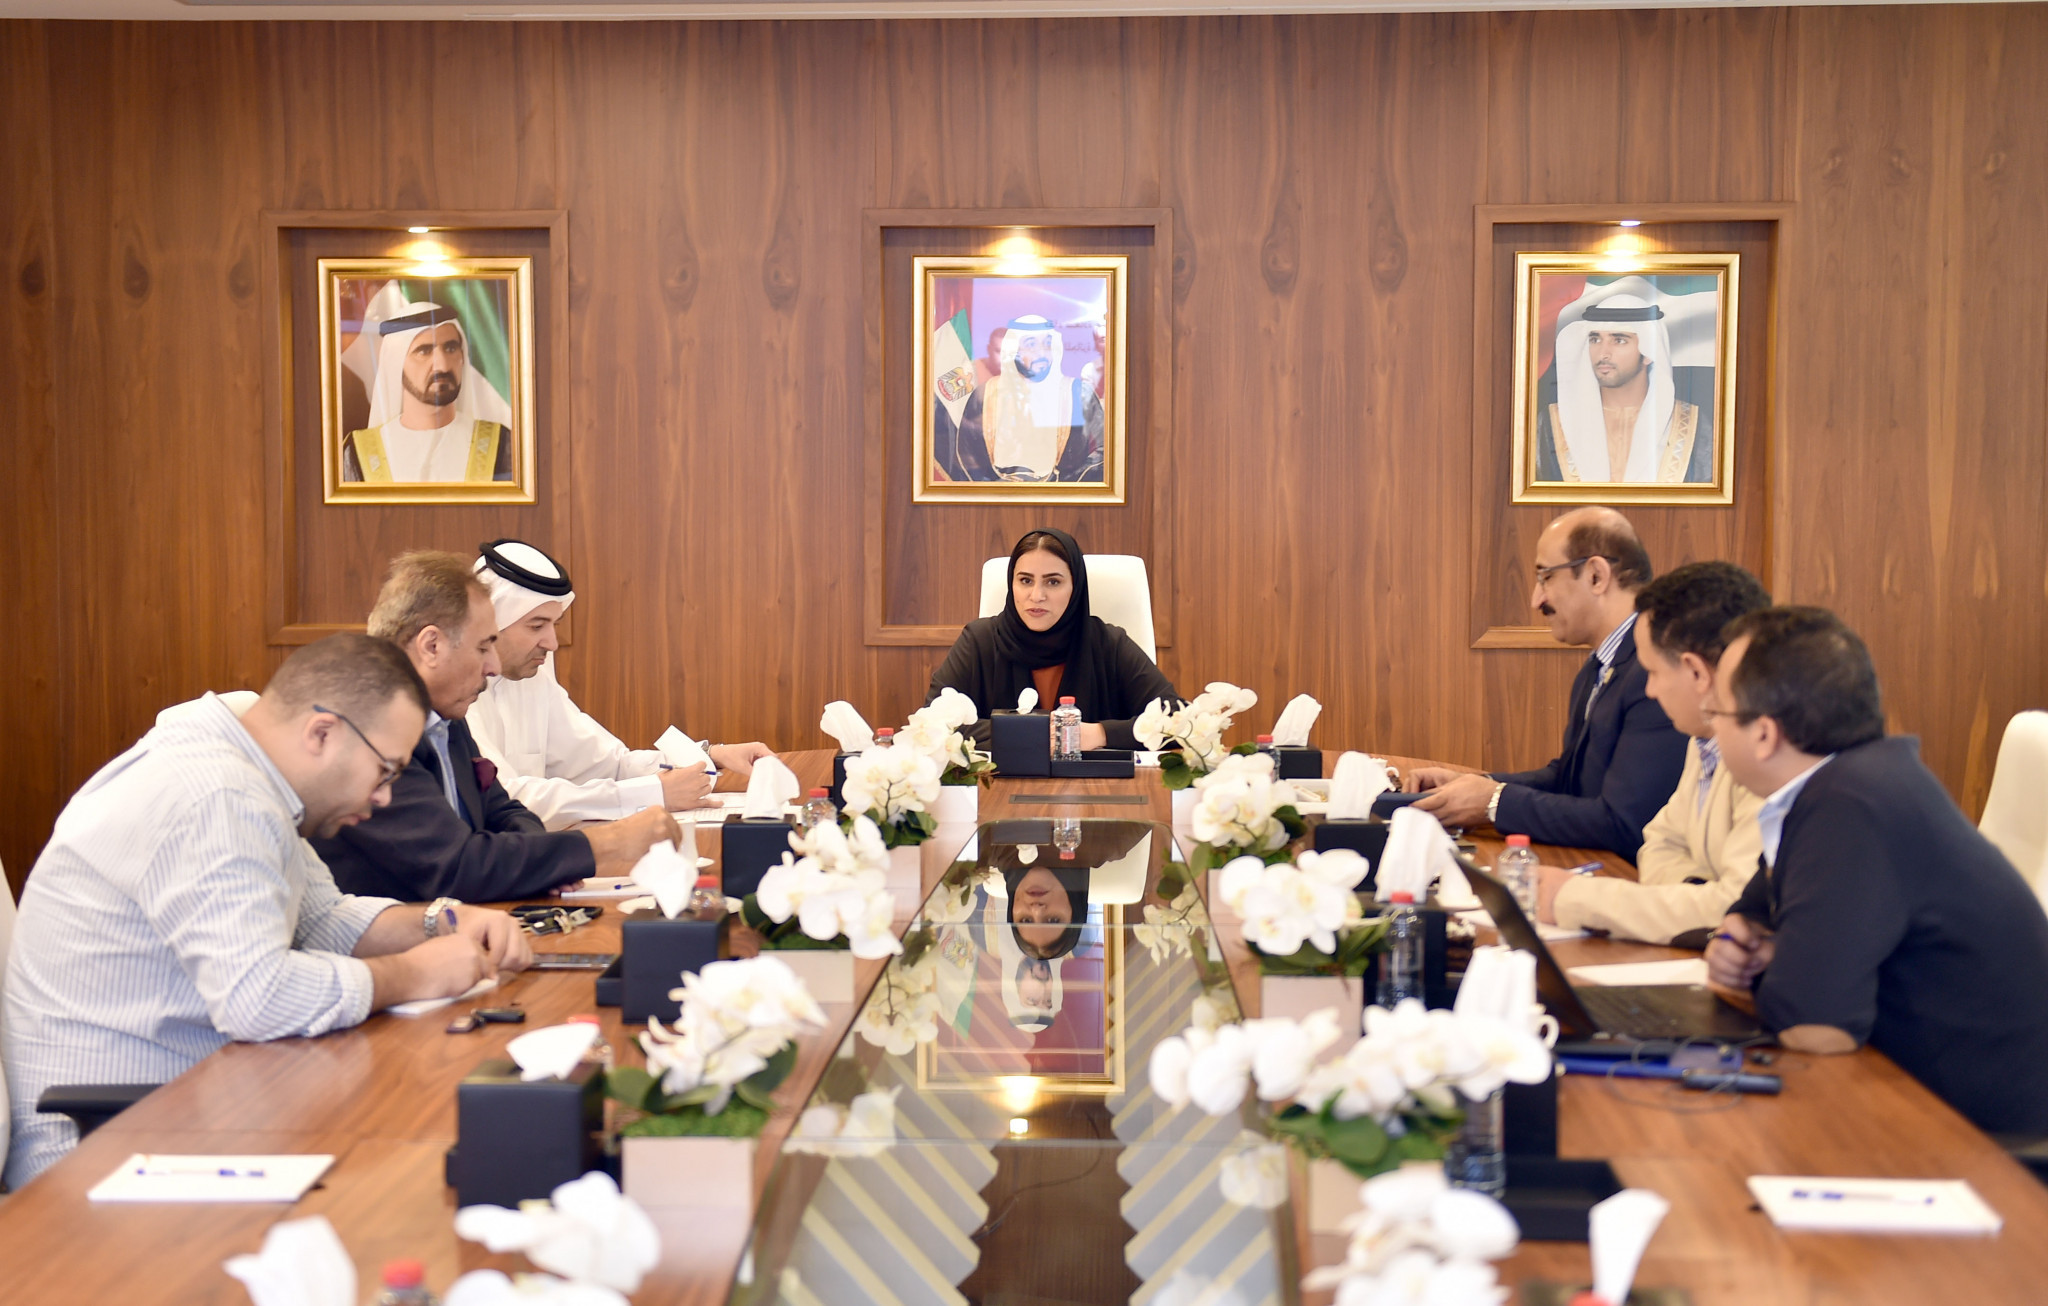 Moaza AlMarri, the secretary general of the Mohammed Bin Rashid Al Maktoum Creative Sports Award, announced the details of the 11th edition in a meeting ©MBRCSA 